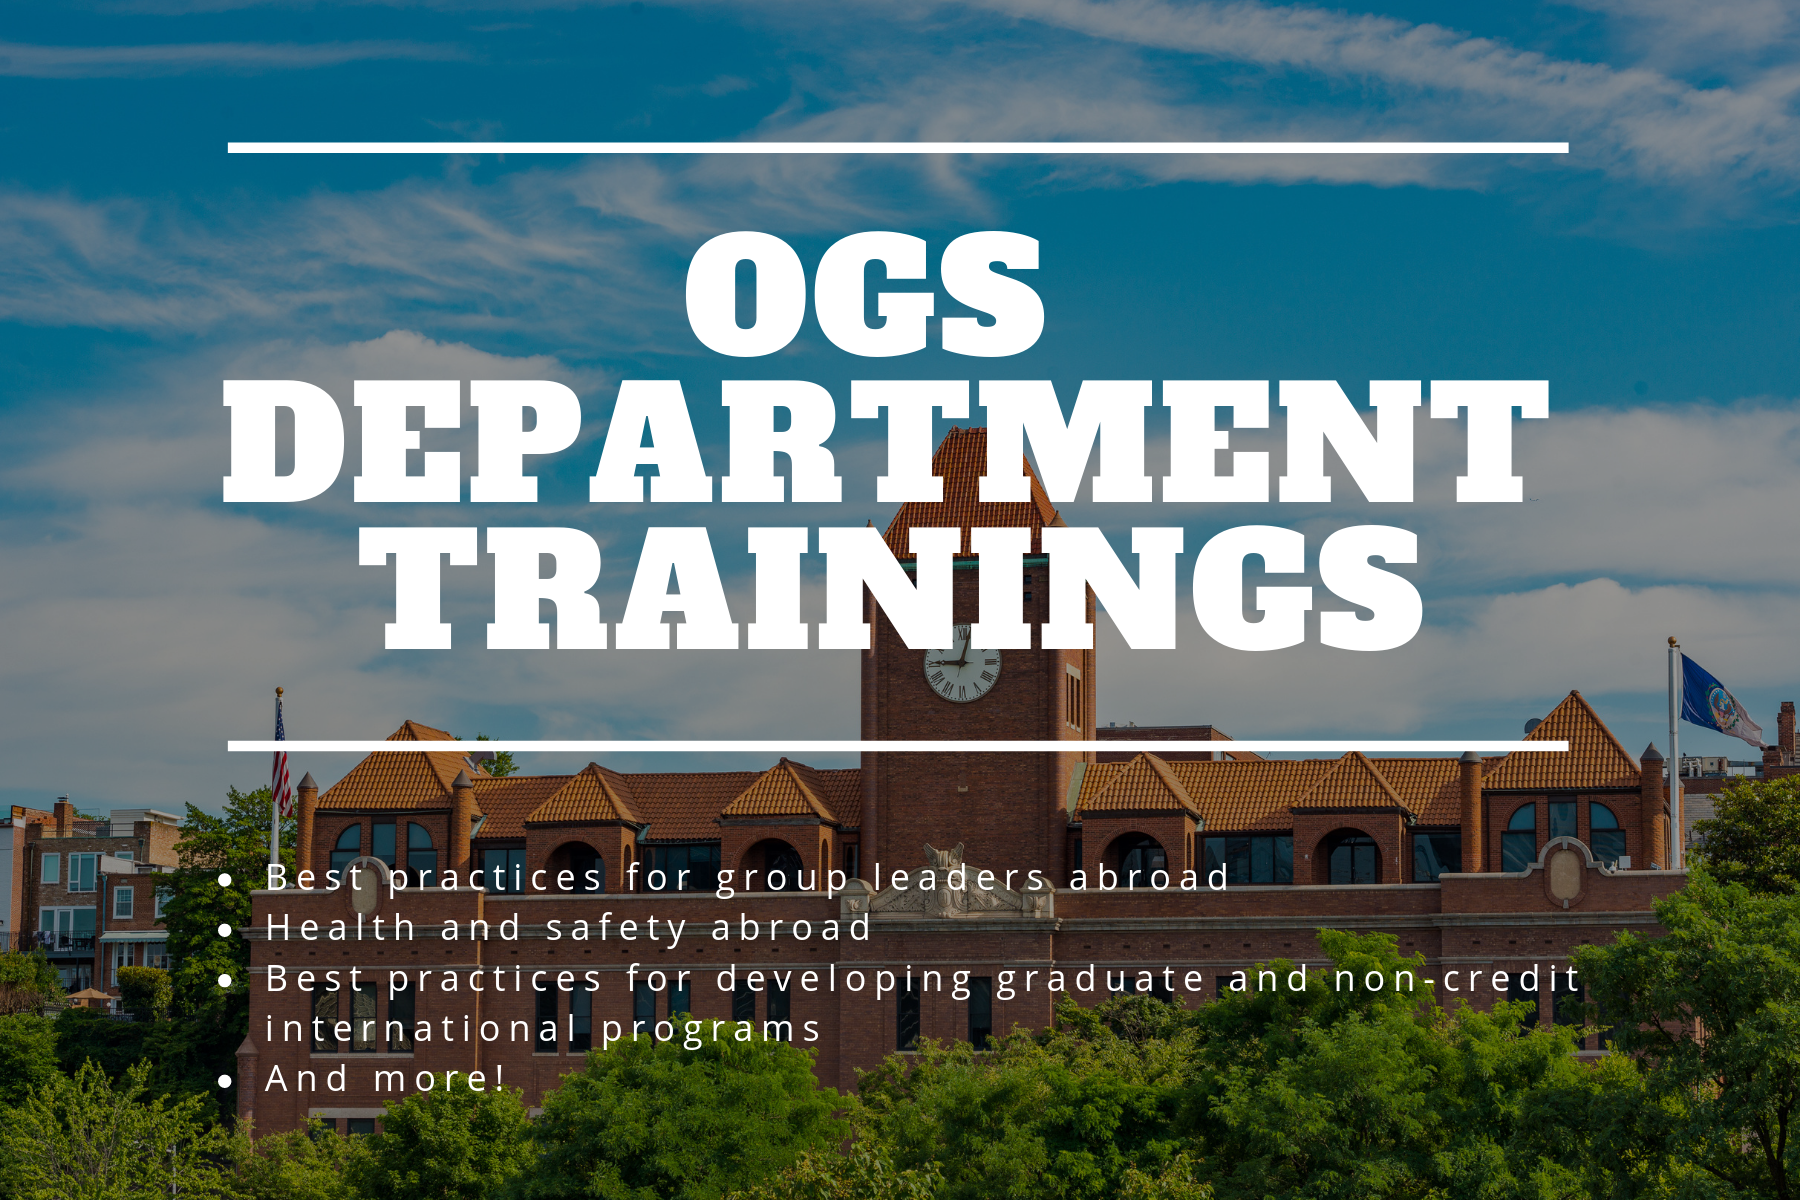 ogs_department_training_ad_v2_1